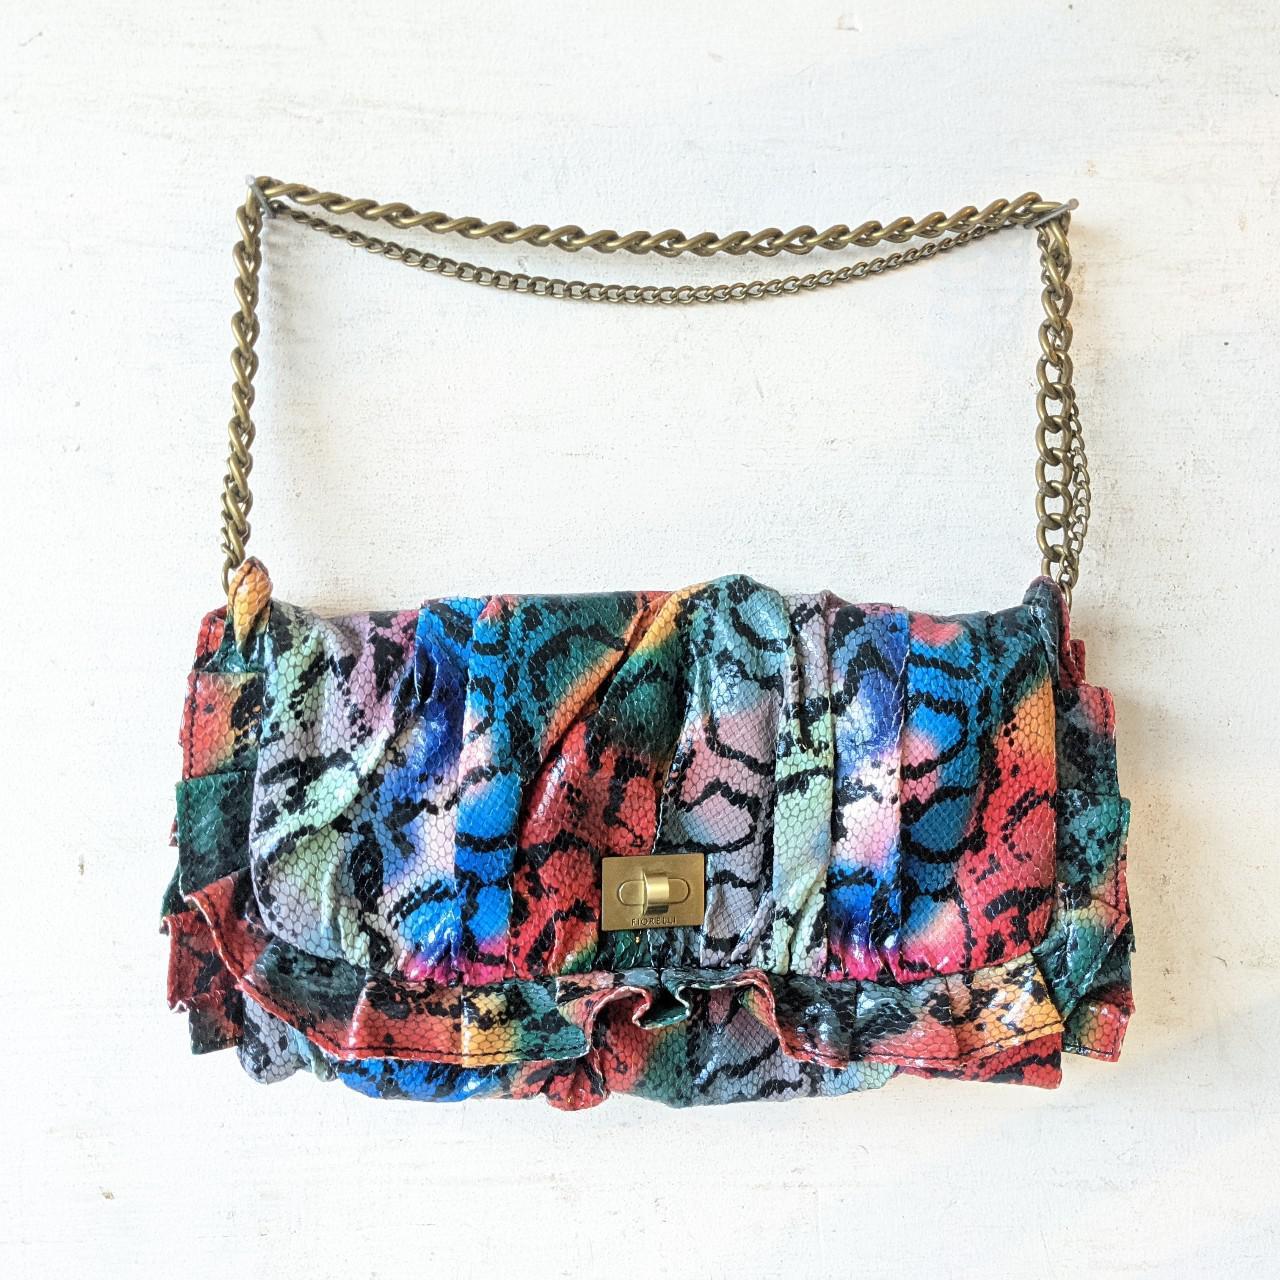 Product Image 1 - Beautiful FIORELLI clutch bag

Multicoloured snakeskin